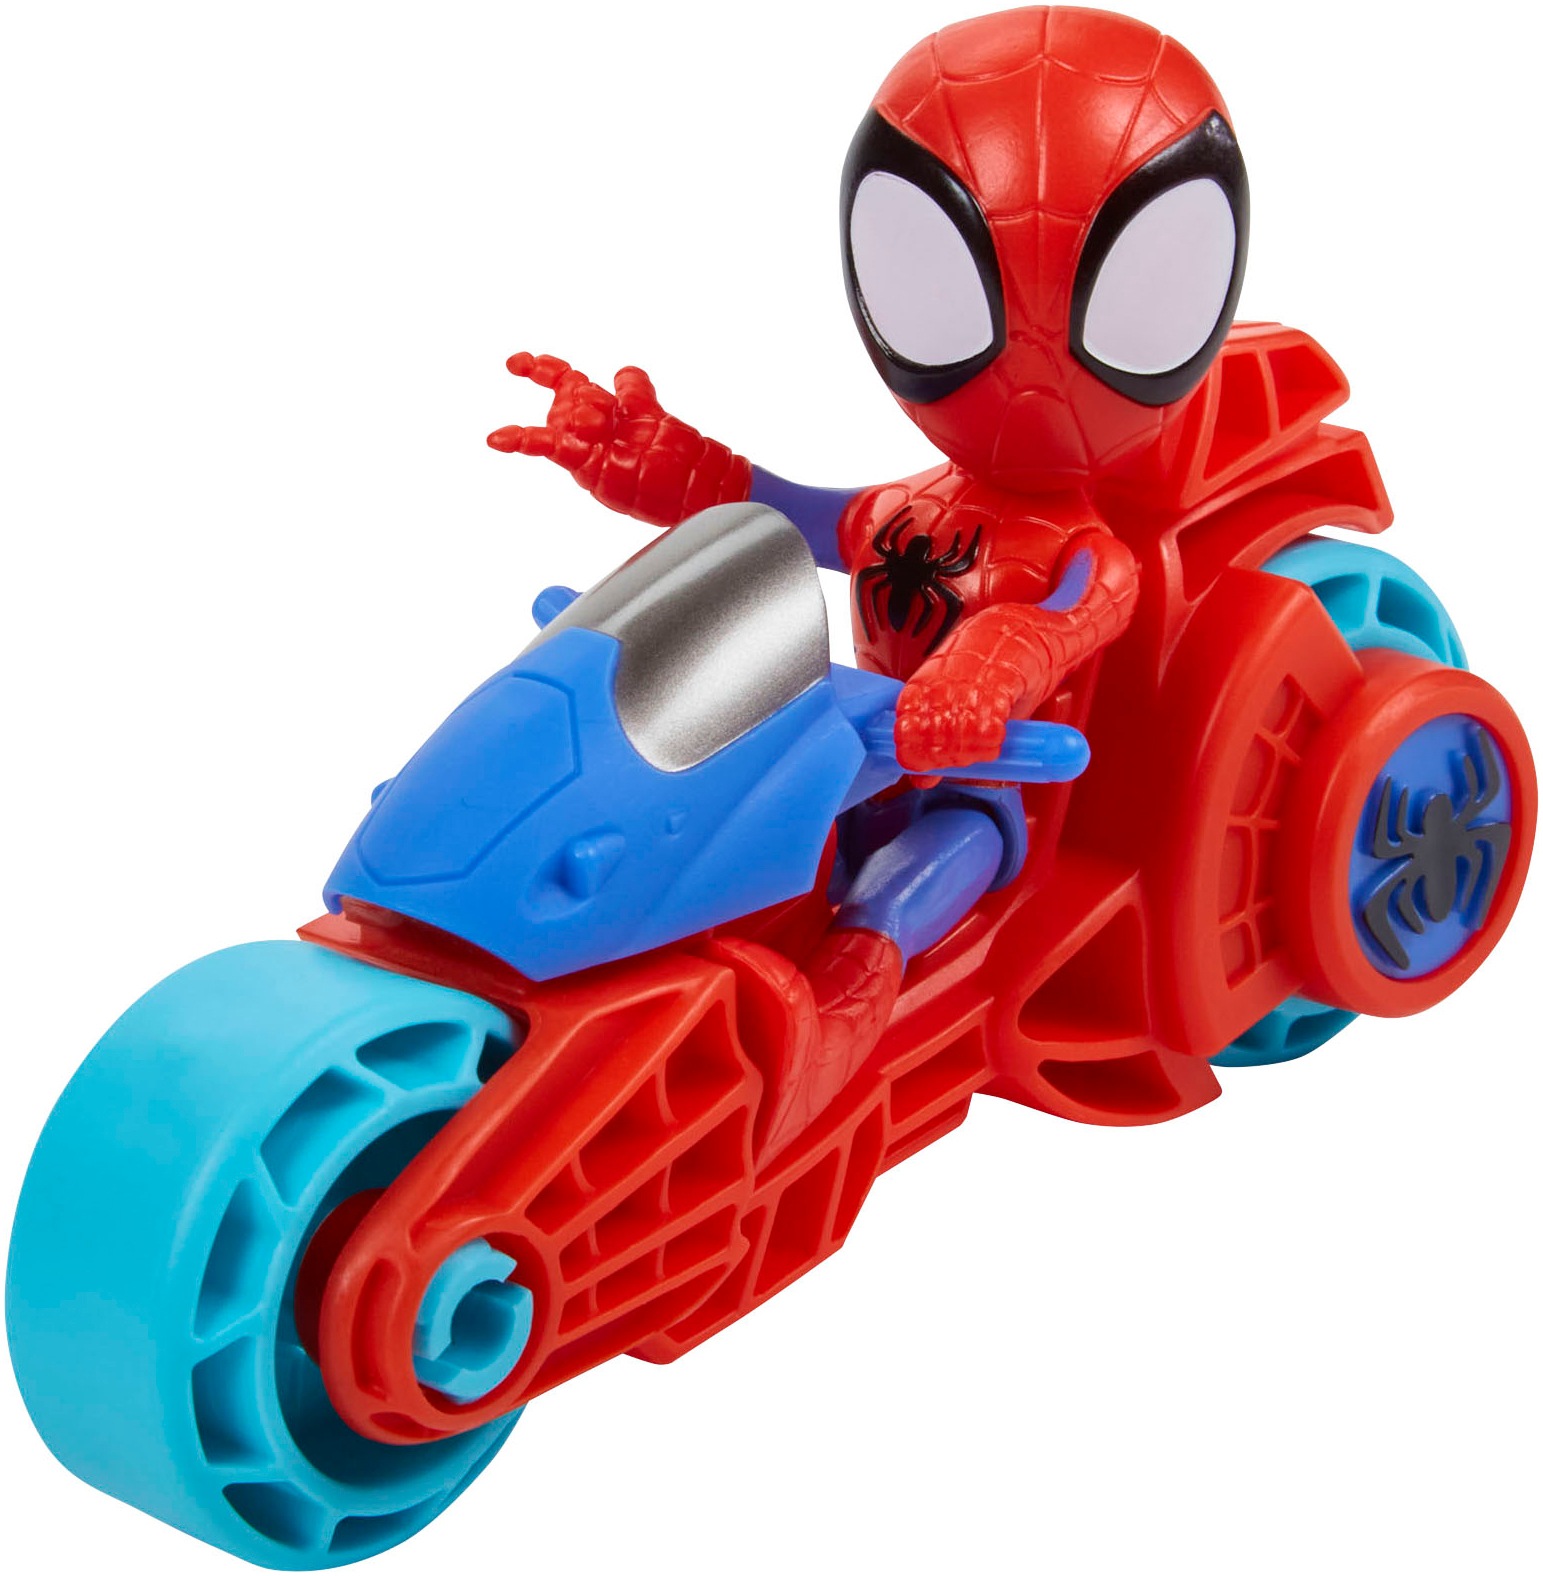 Hasbro Actionfigur »Marvel Spidey and His Amazing Friends, Spidey mit Motorrad«